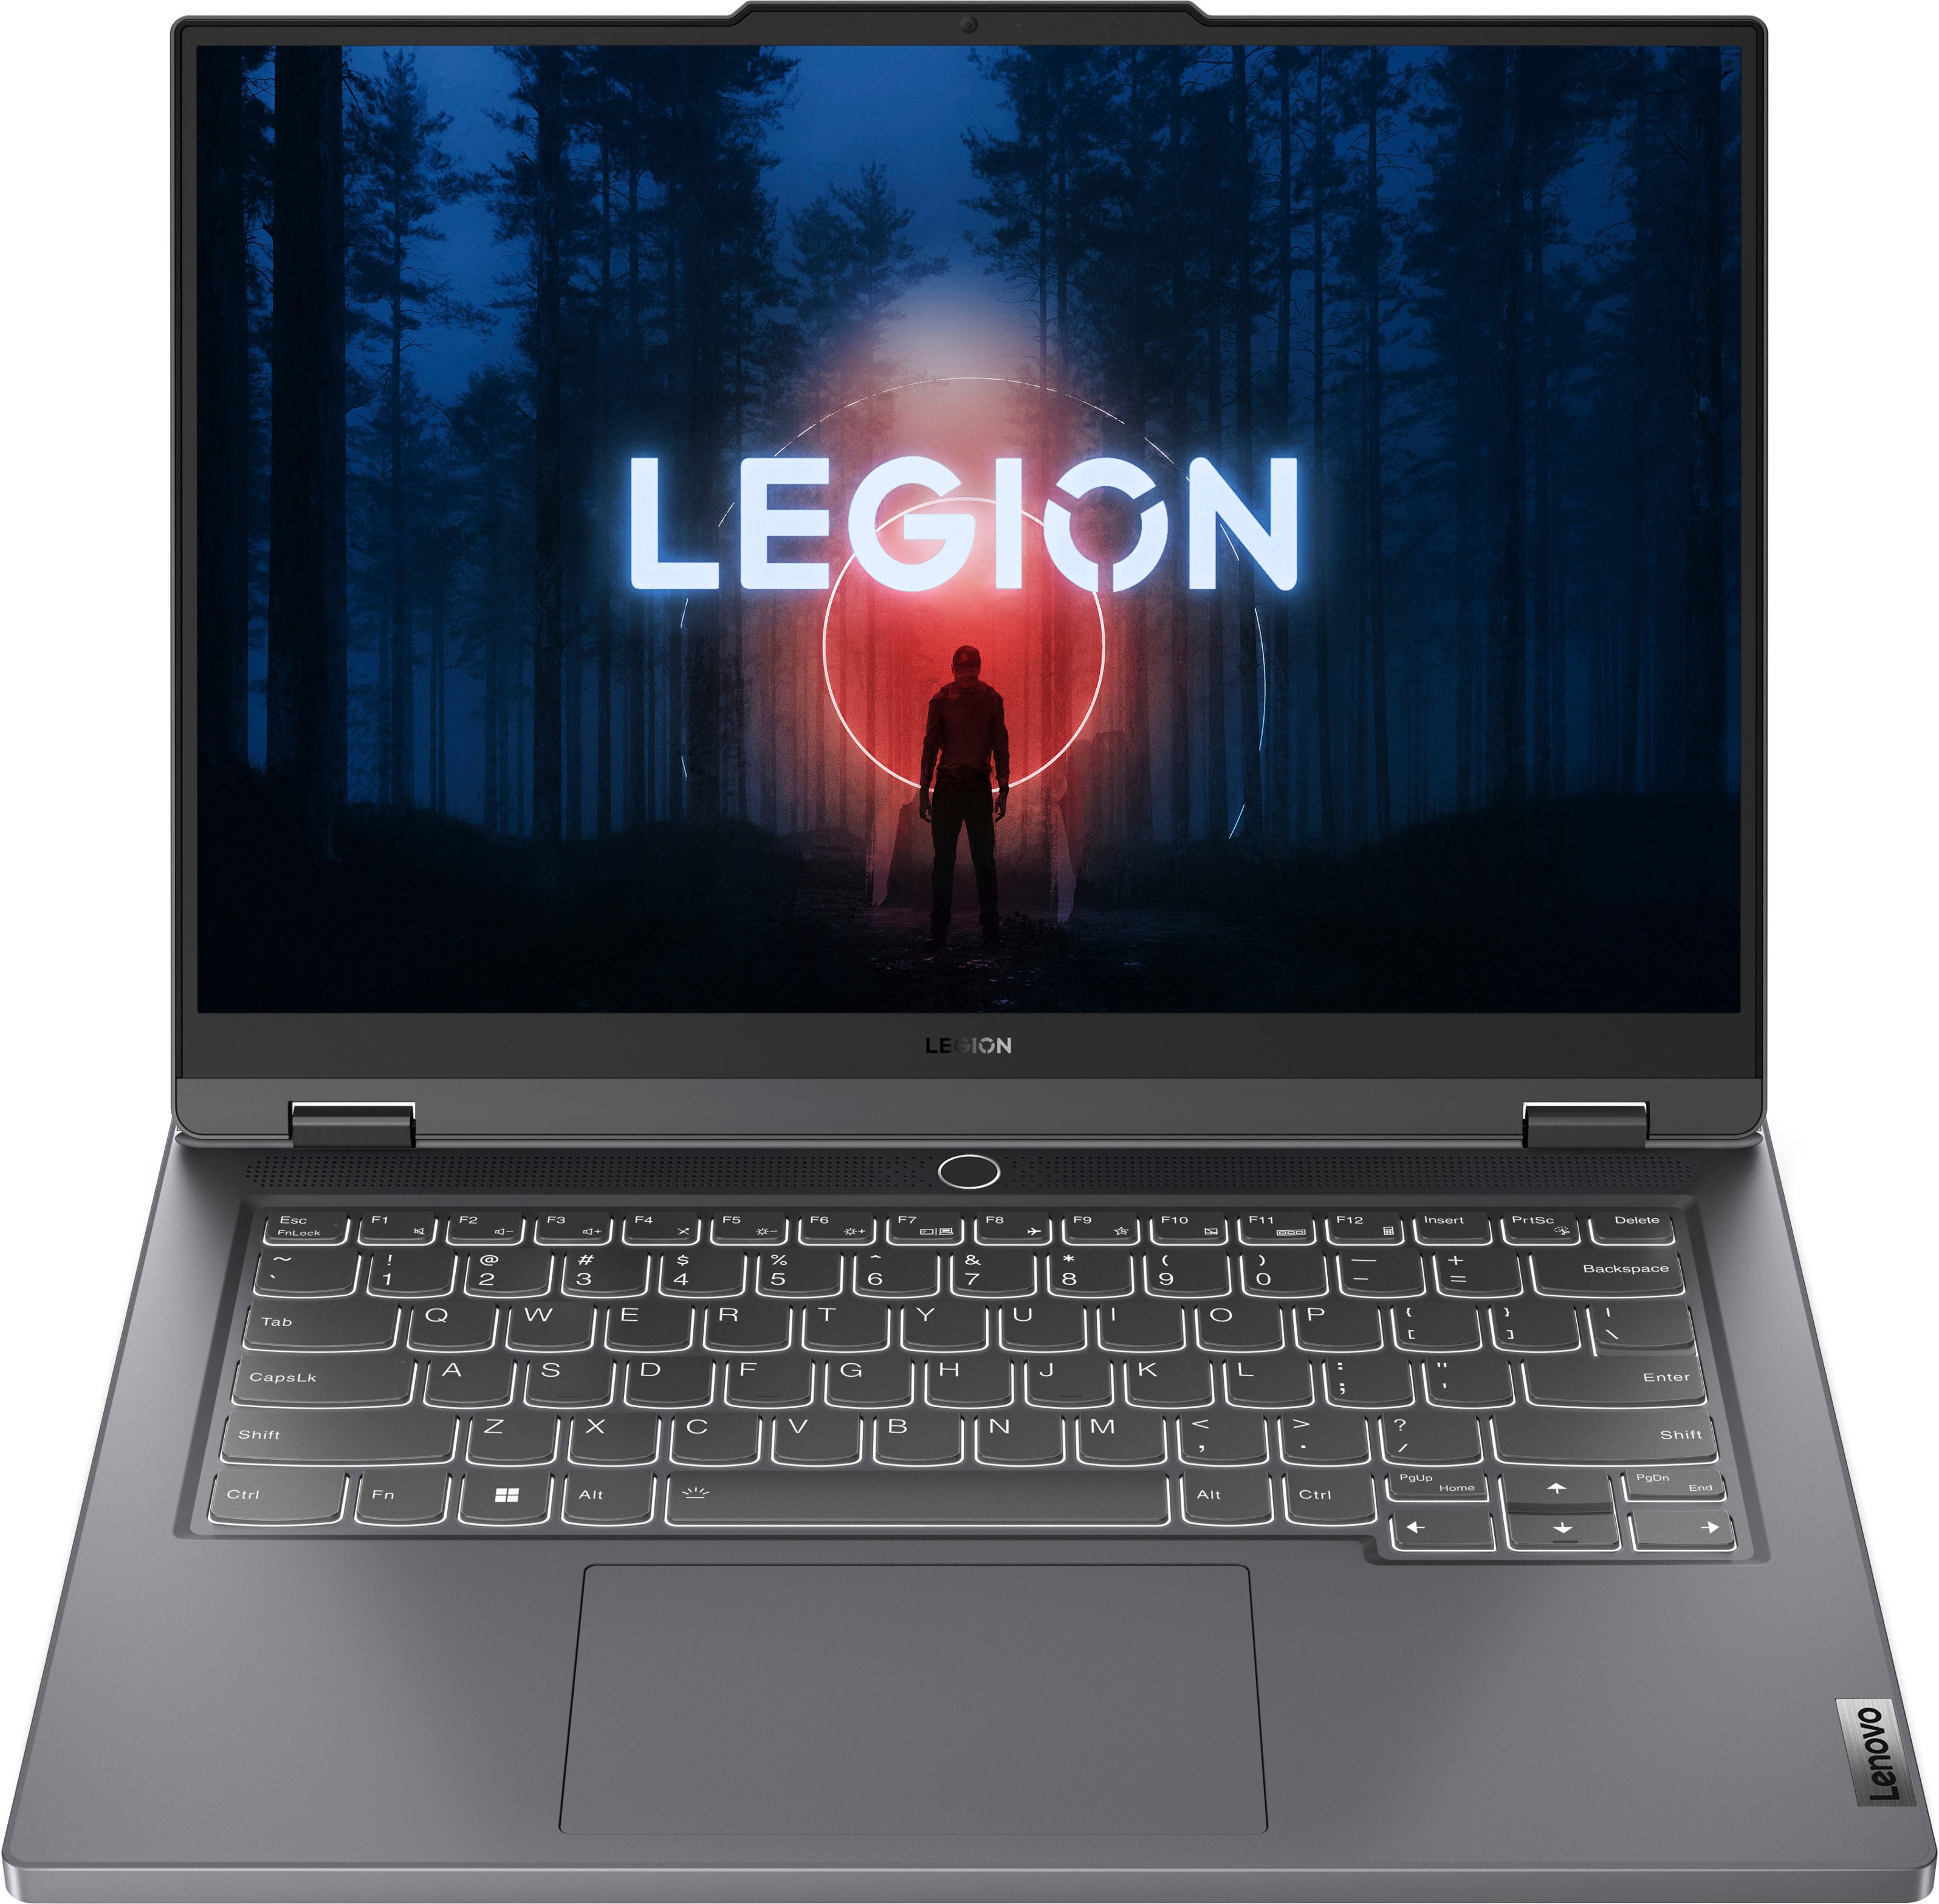 Lenovo Legion 5 15.6 WQHD 165Hz Gaming Laptop AMD Ryzen 7 7735H 16GB RAM  512GB SSD NVIDIA GeForce RTX 4060 8GB Storm Grey 